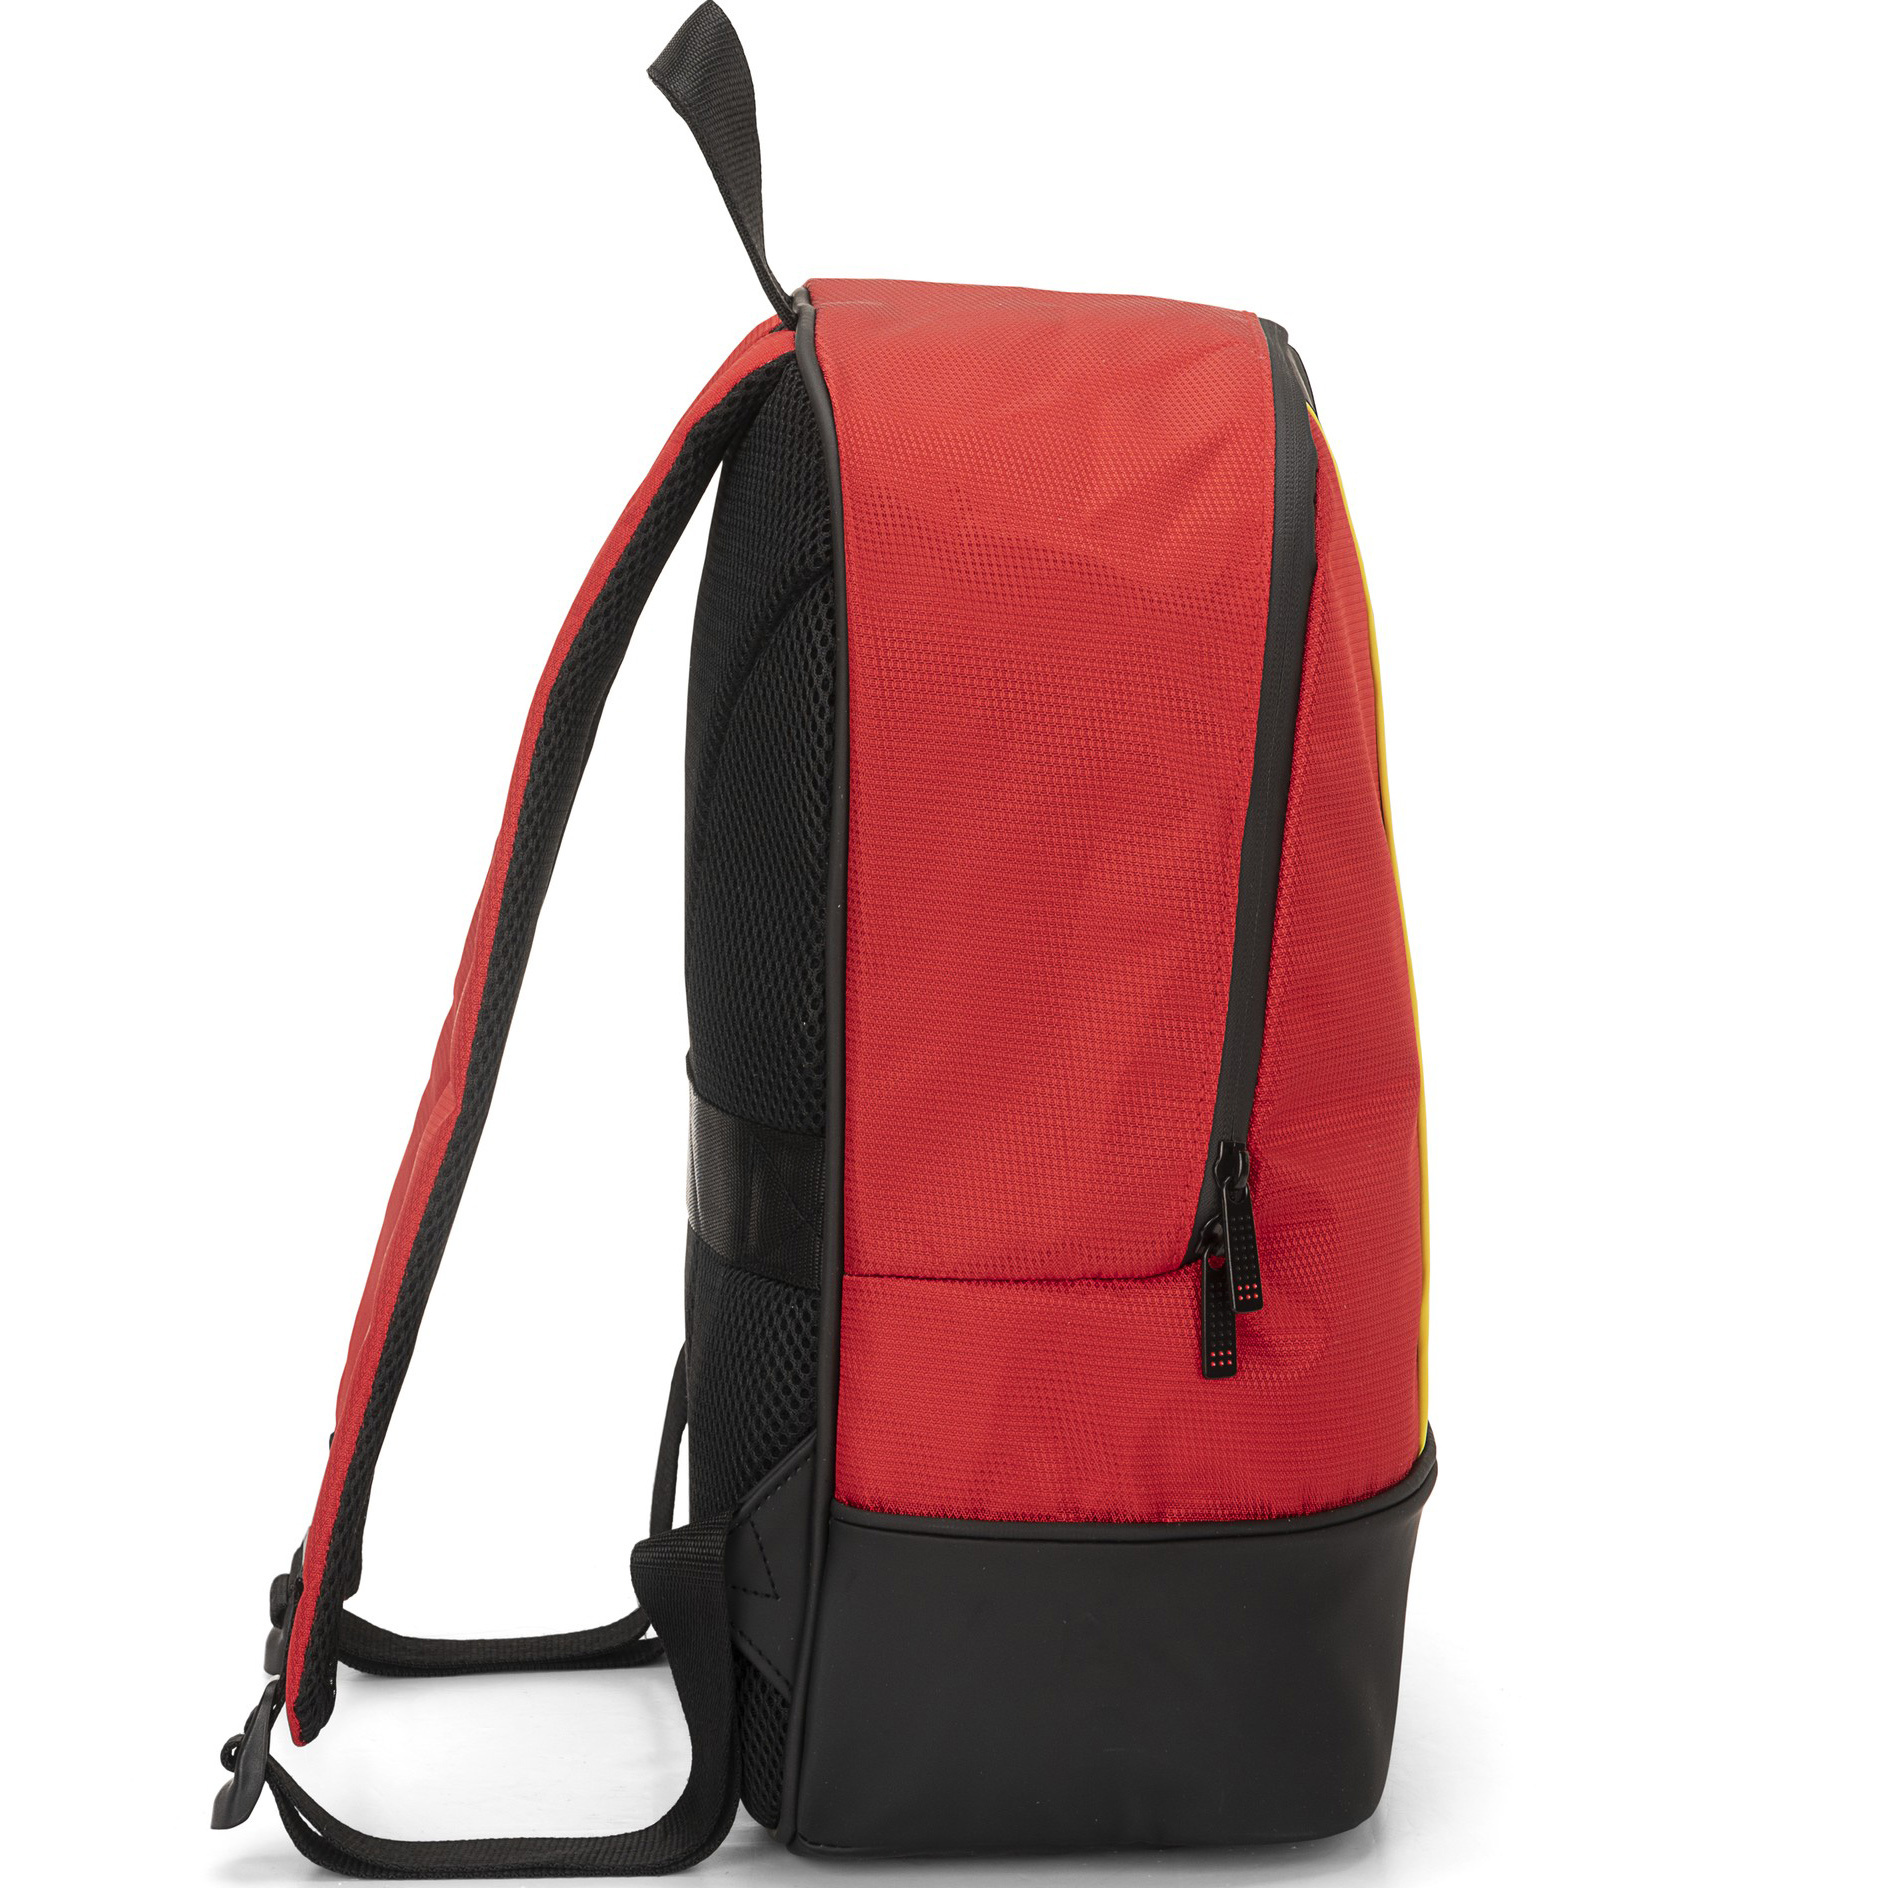 Ferrari Backpack, Cavallino Rampante - 40 x 28 x 15 cm - Polyester